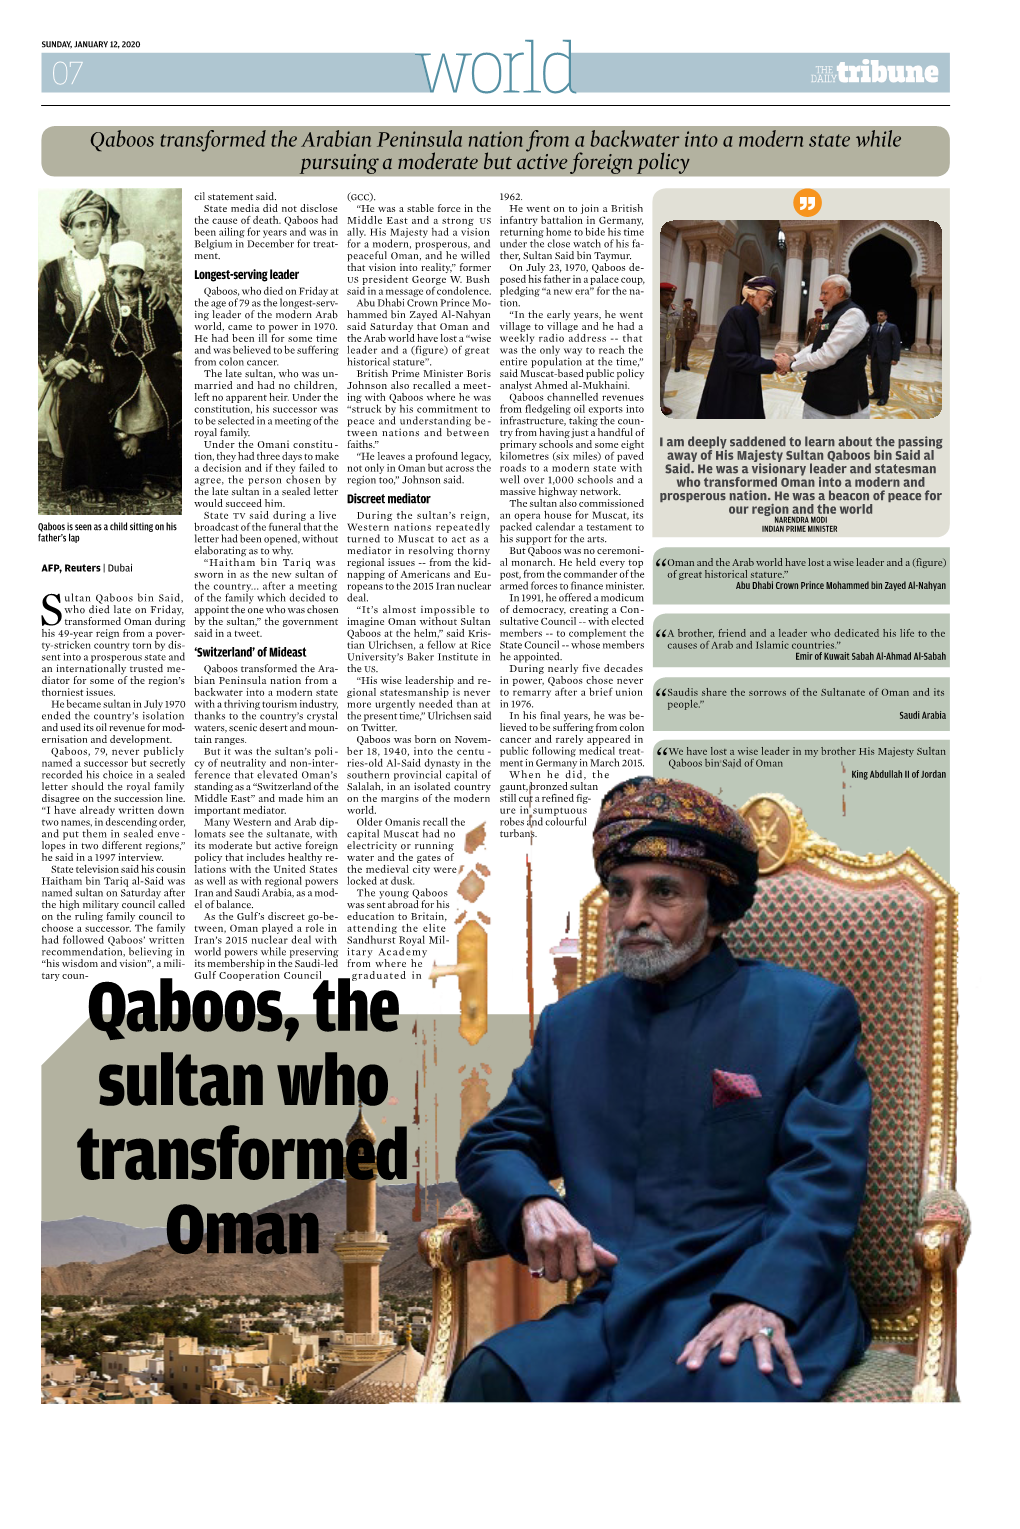 Qaboos, the Sultan Who Transformed Oman